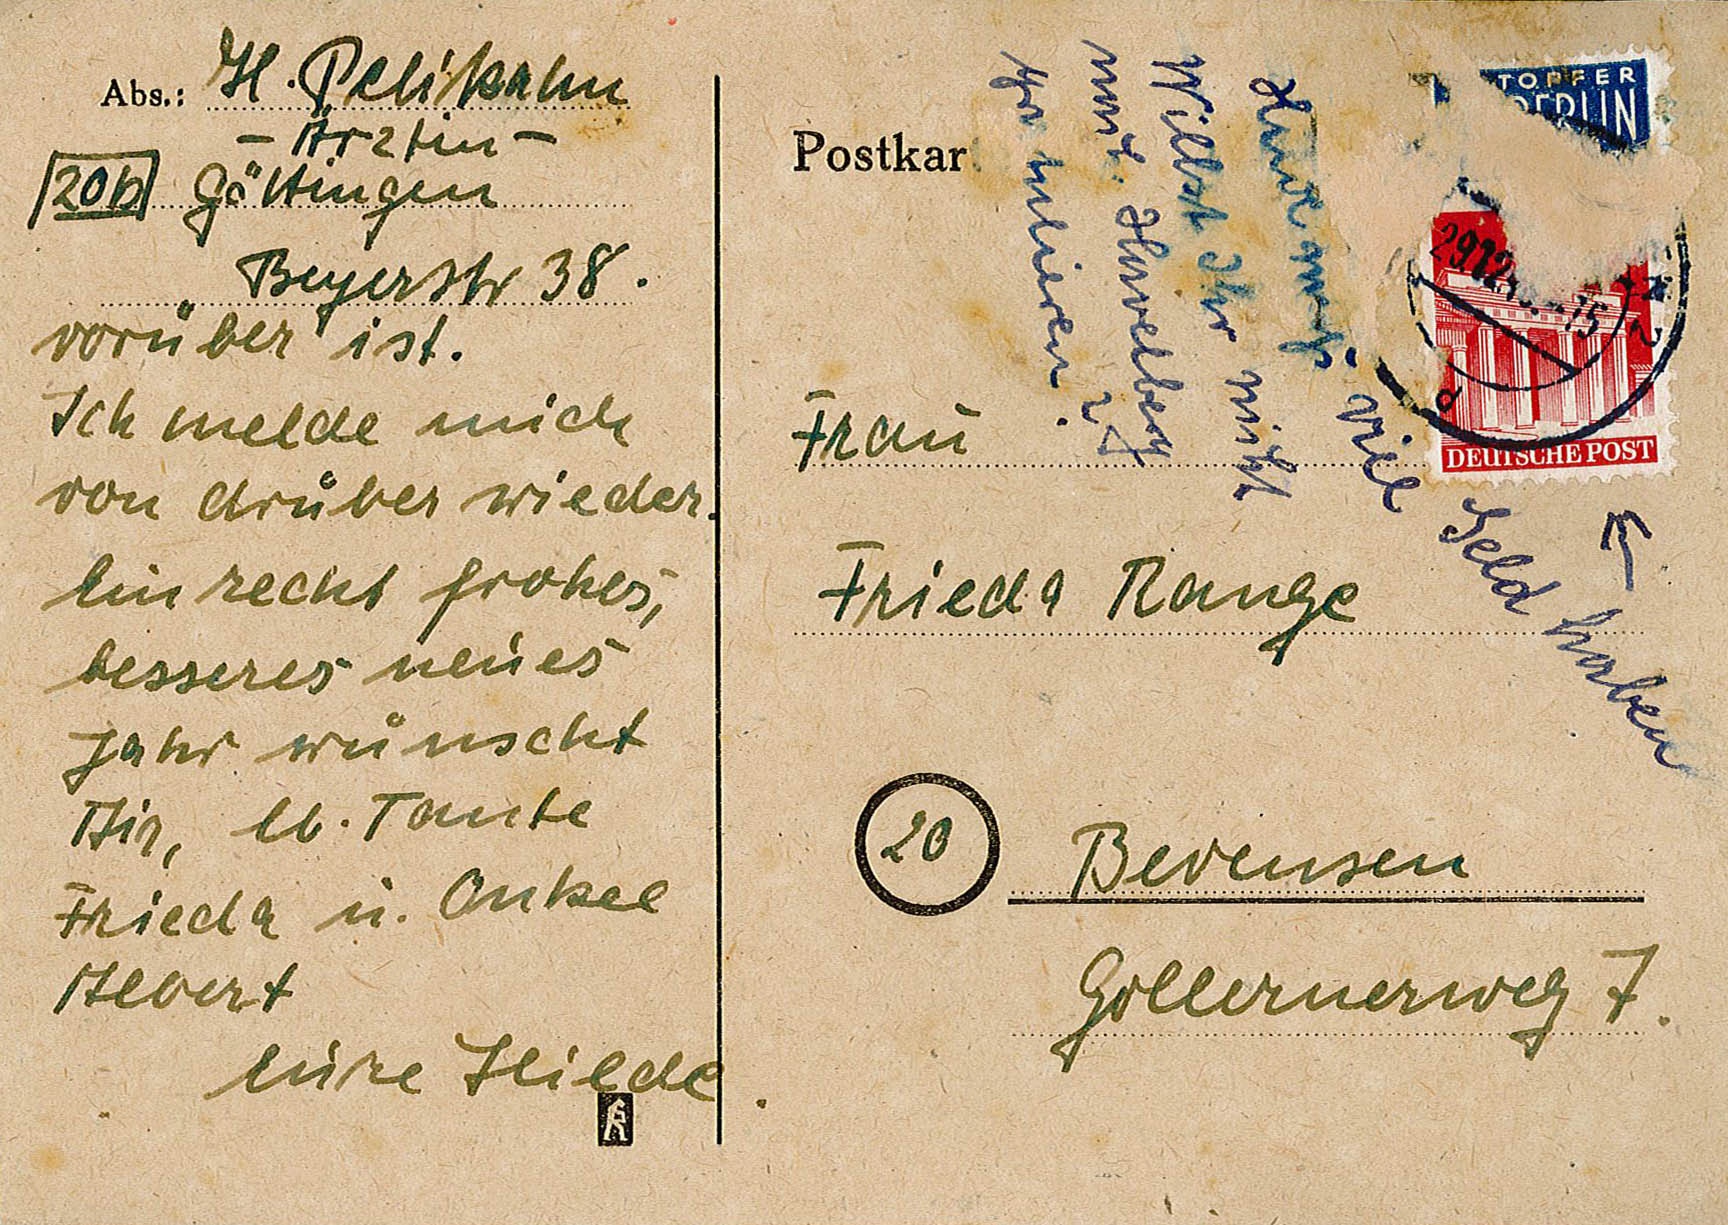 Postkarte an Ingeborg Range von Hilde Pelikan, 27. Dezember 1948 (Museum Wolmirstedt RR-F)